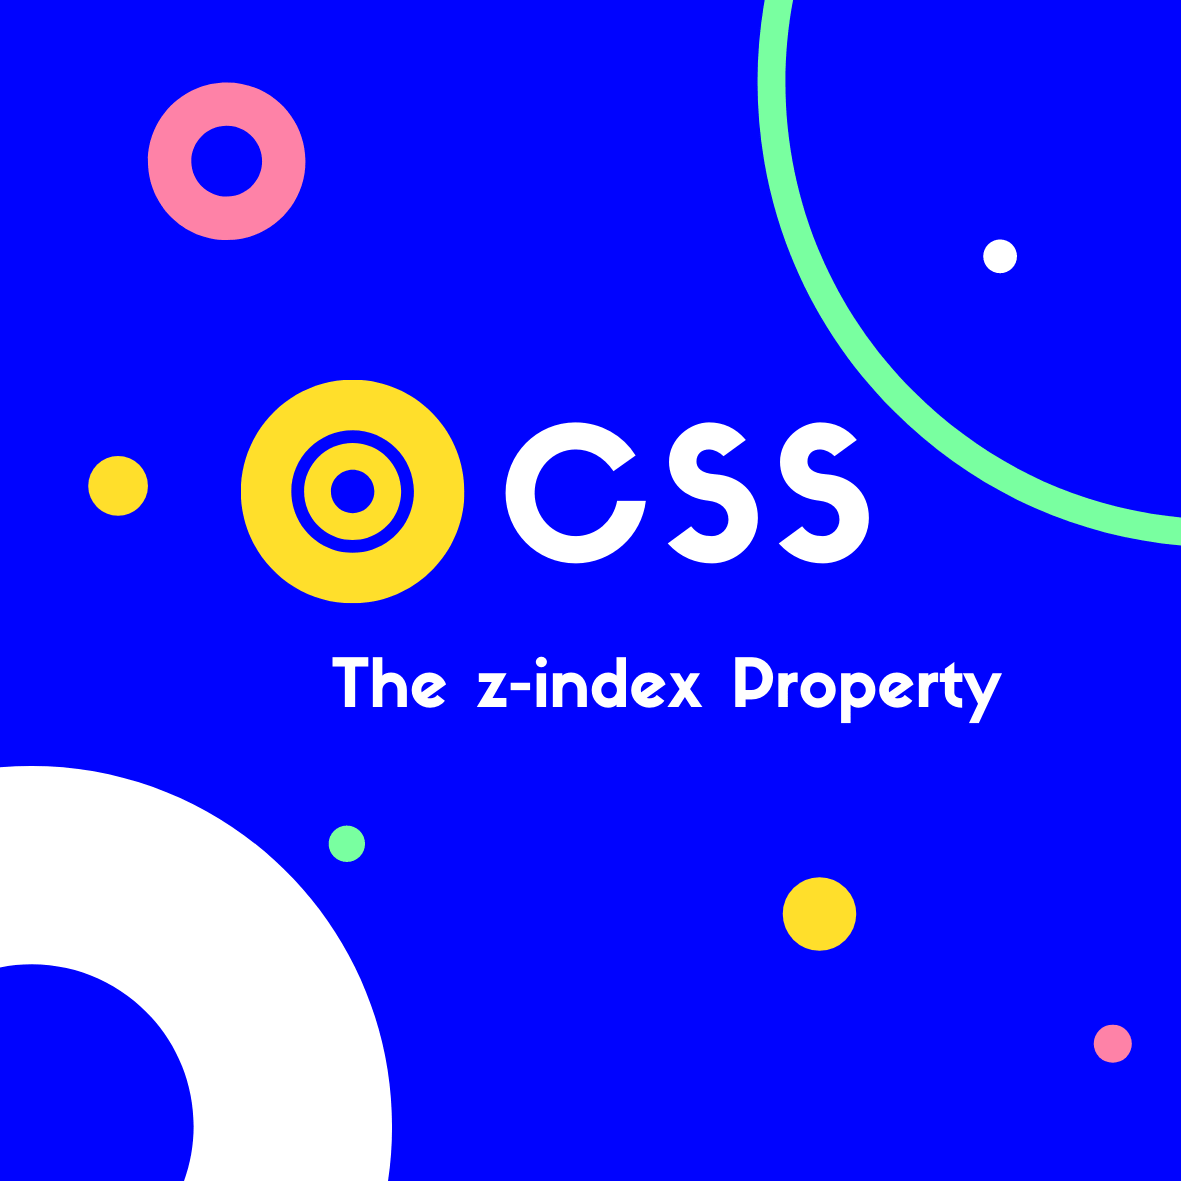 The z-index Property